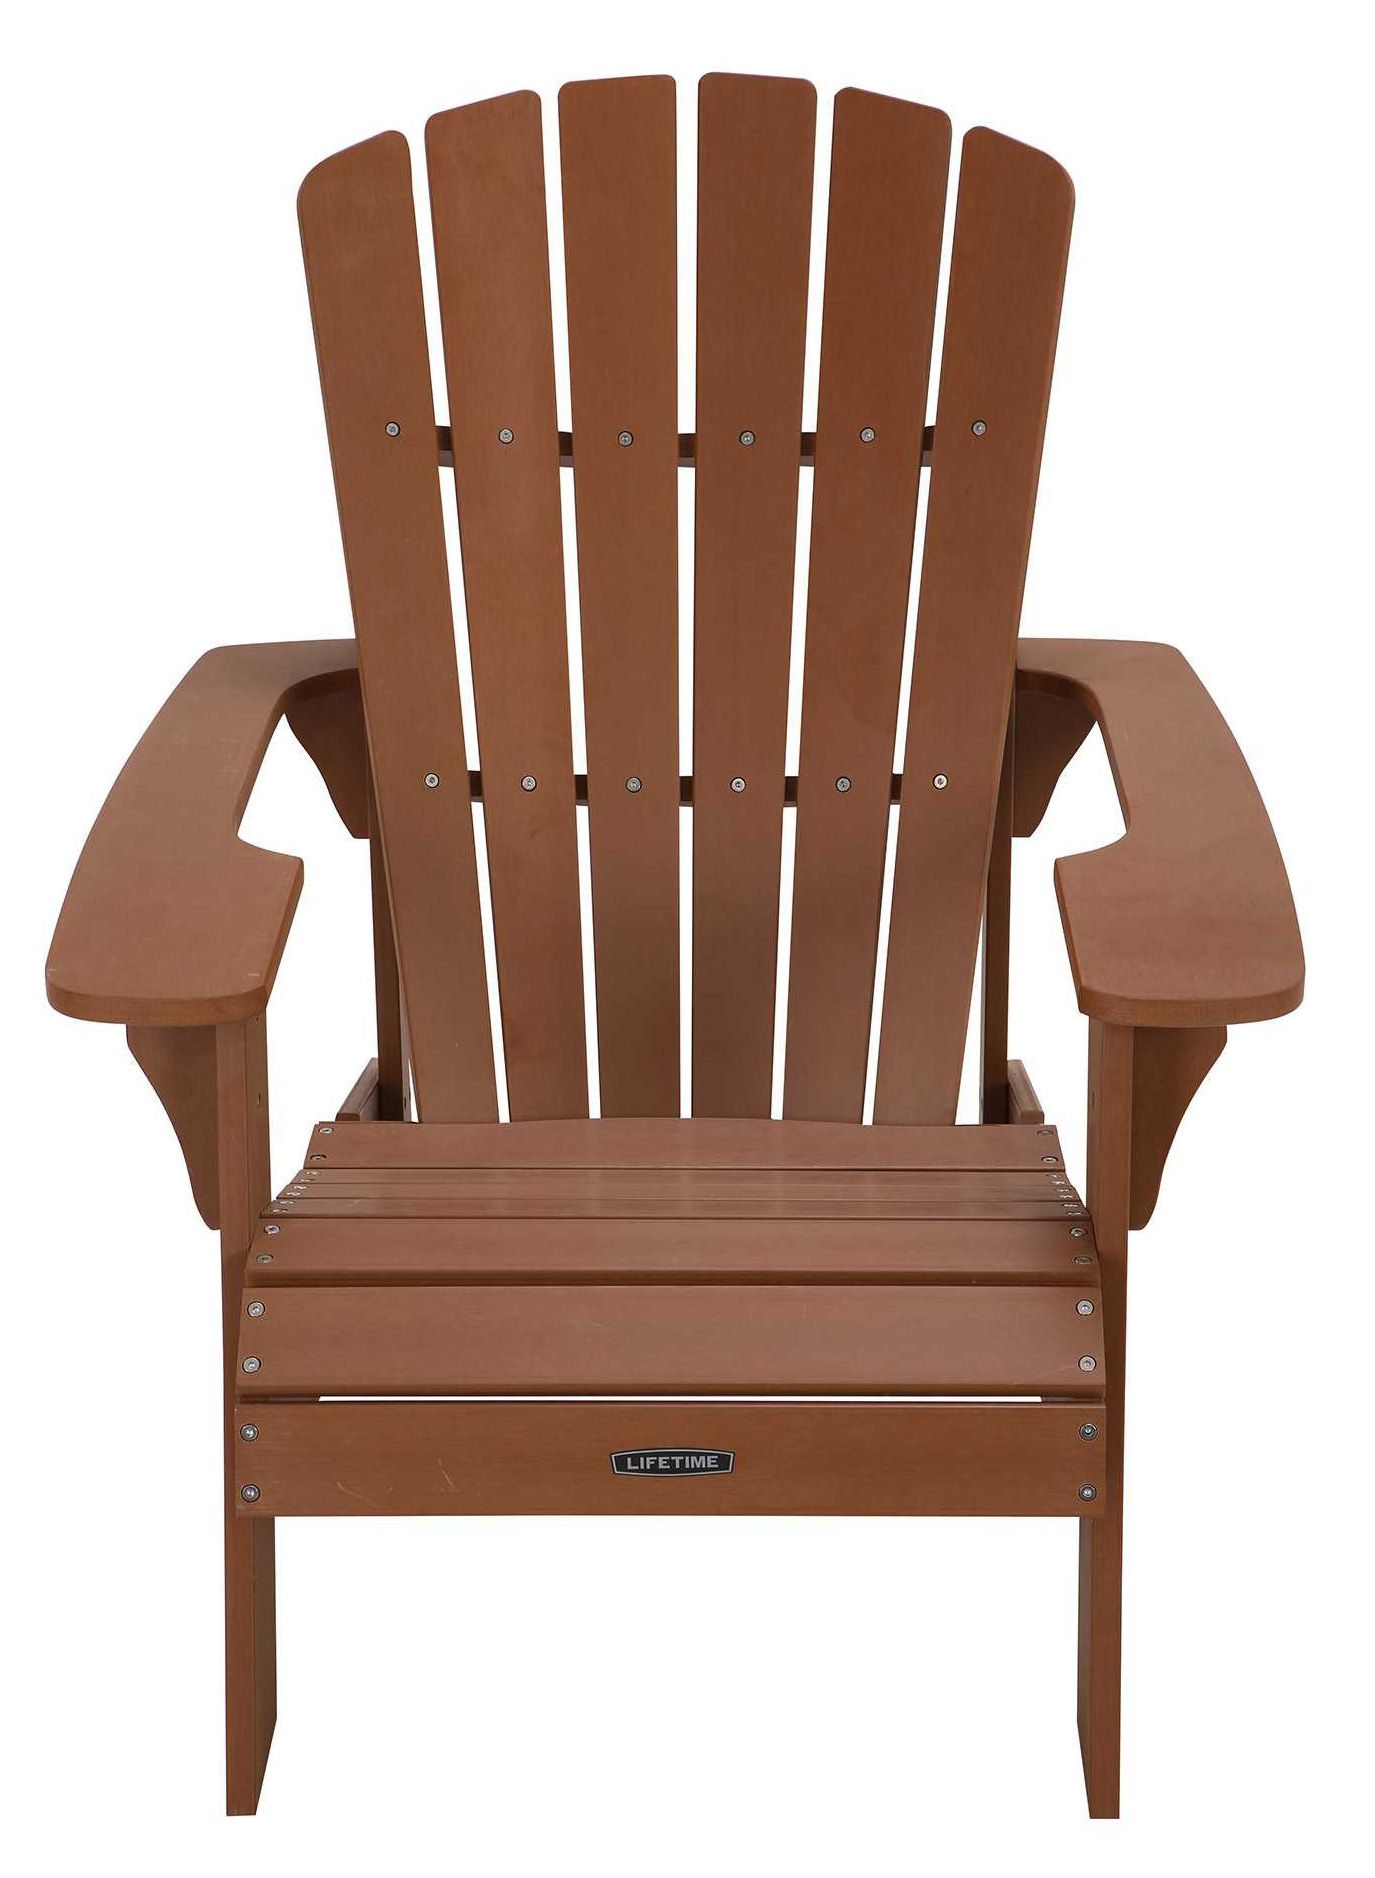 Lifetime Adirondack Chair Brown Bjs Wholesale Club